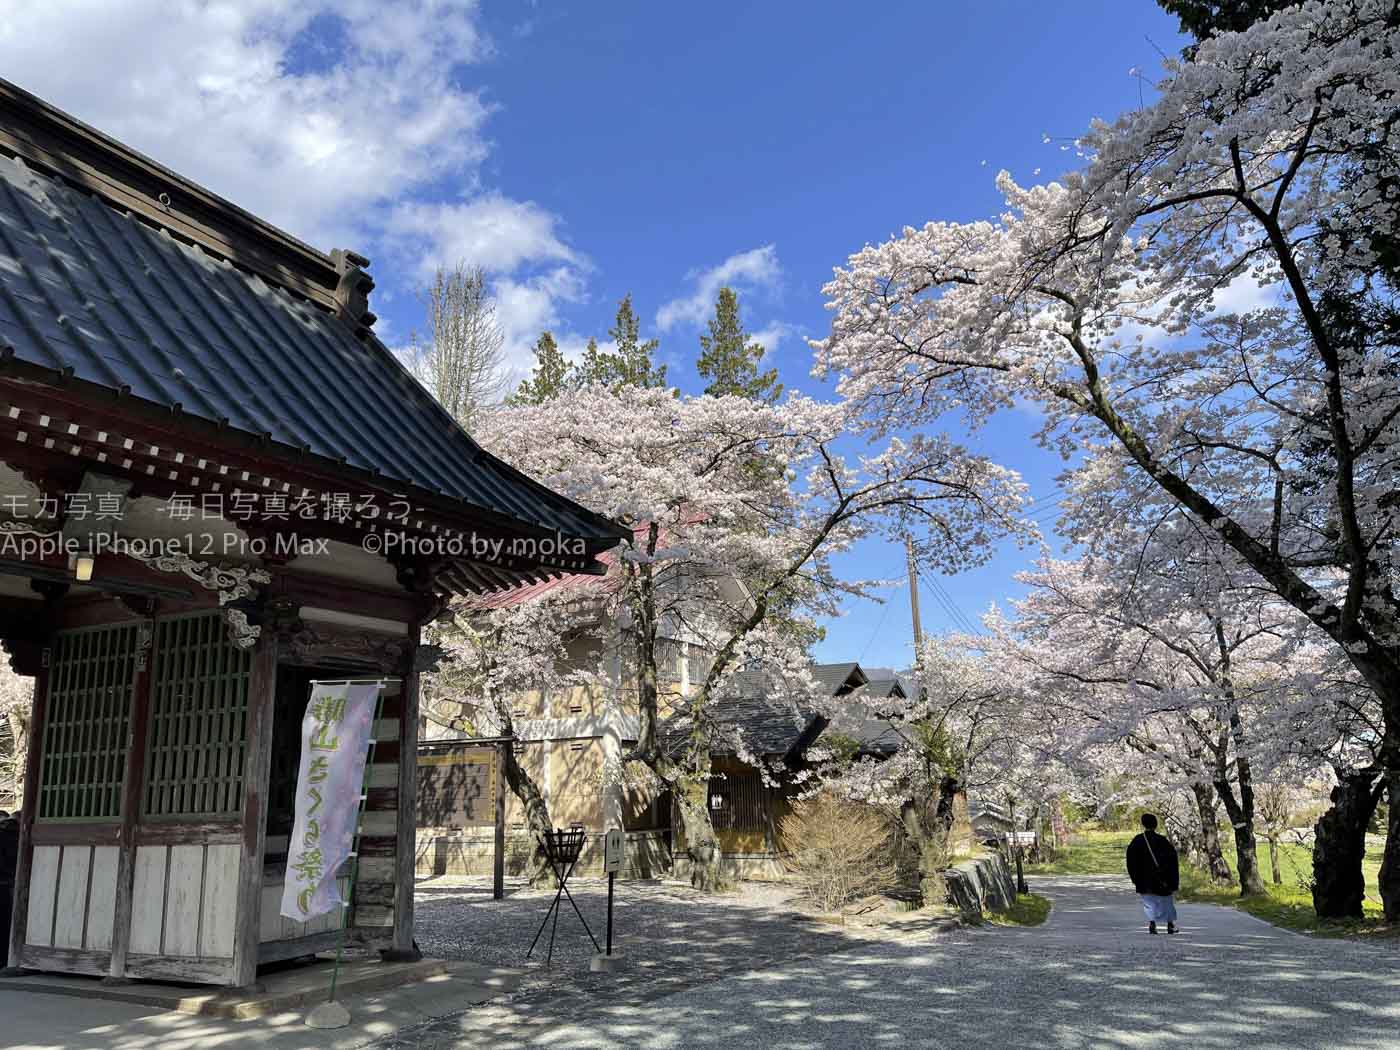 iPhoneで冨士御室浅間神社の桜を撮影